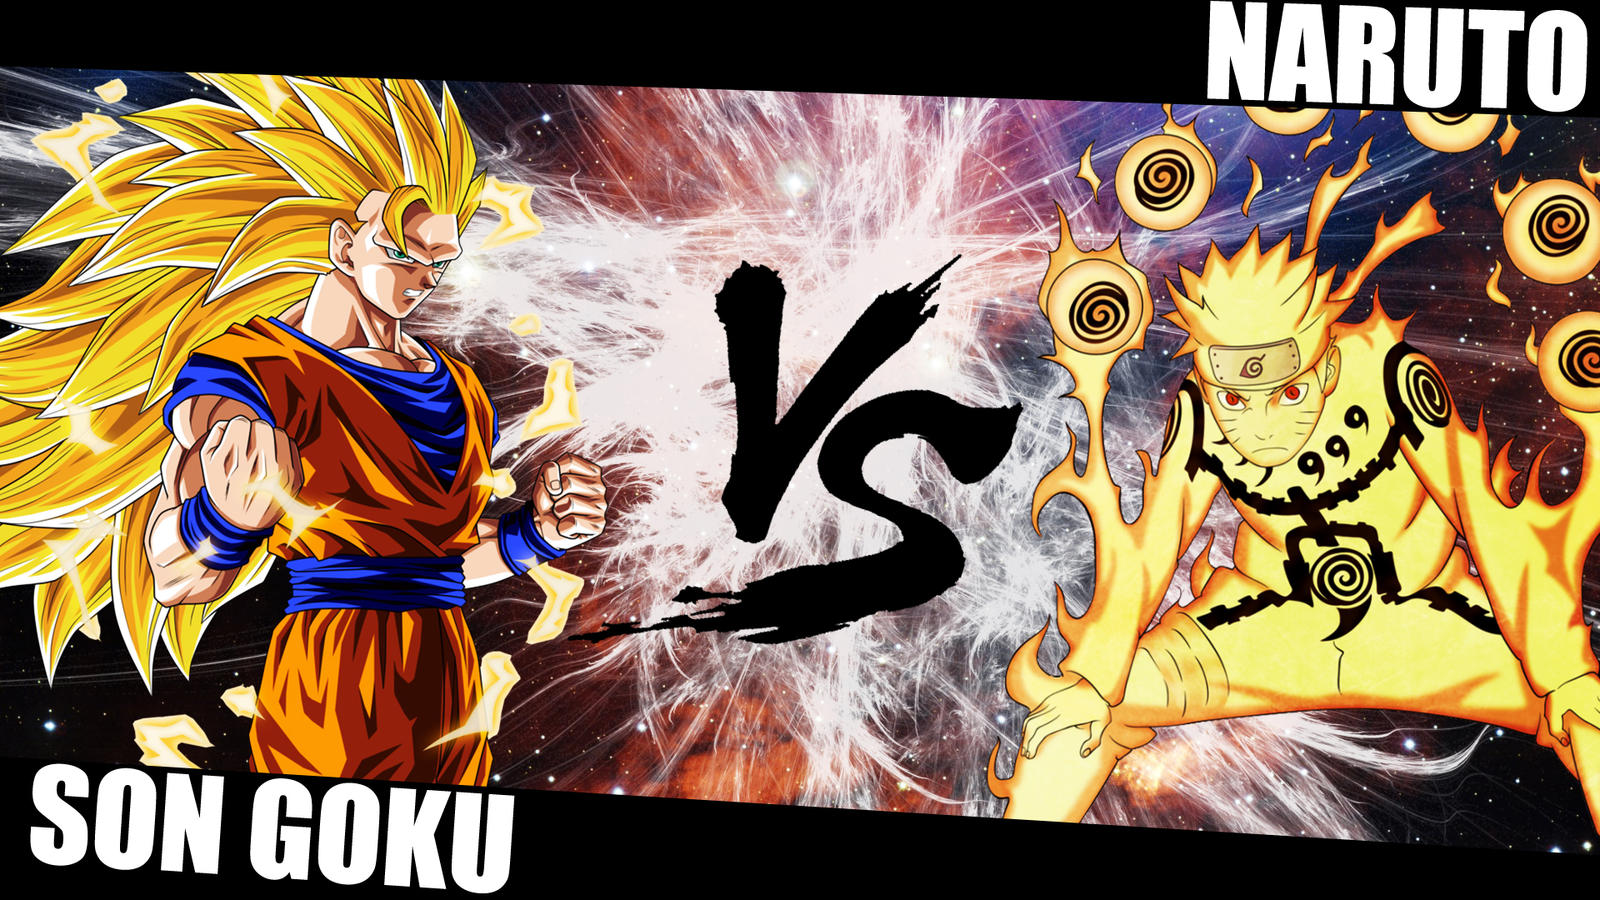 Goku Vs Naruto Wallpaper By Oxelon On Deviantart